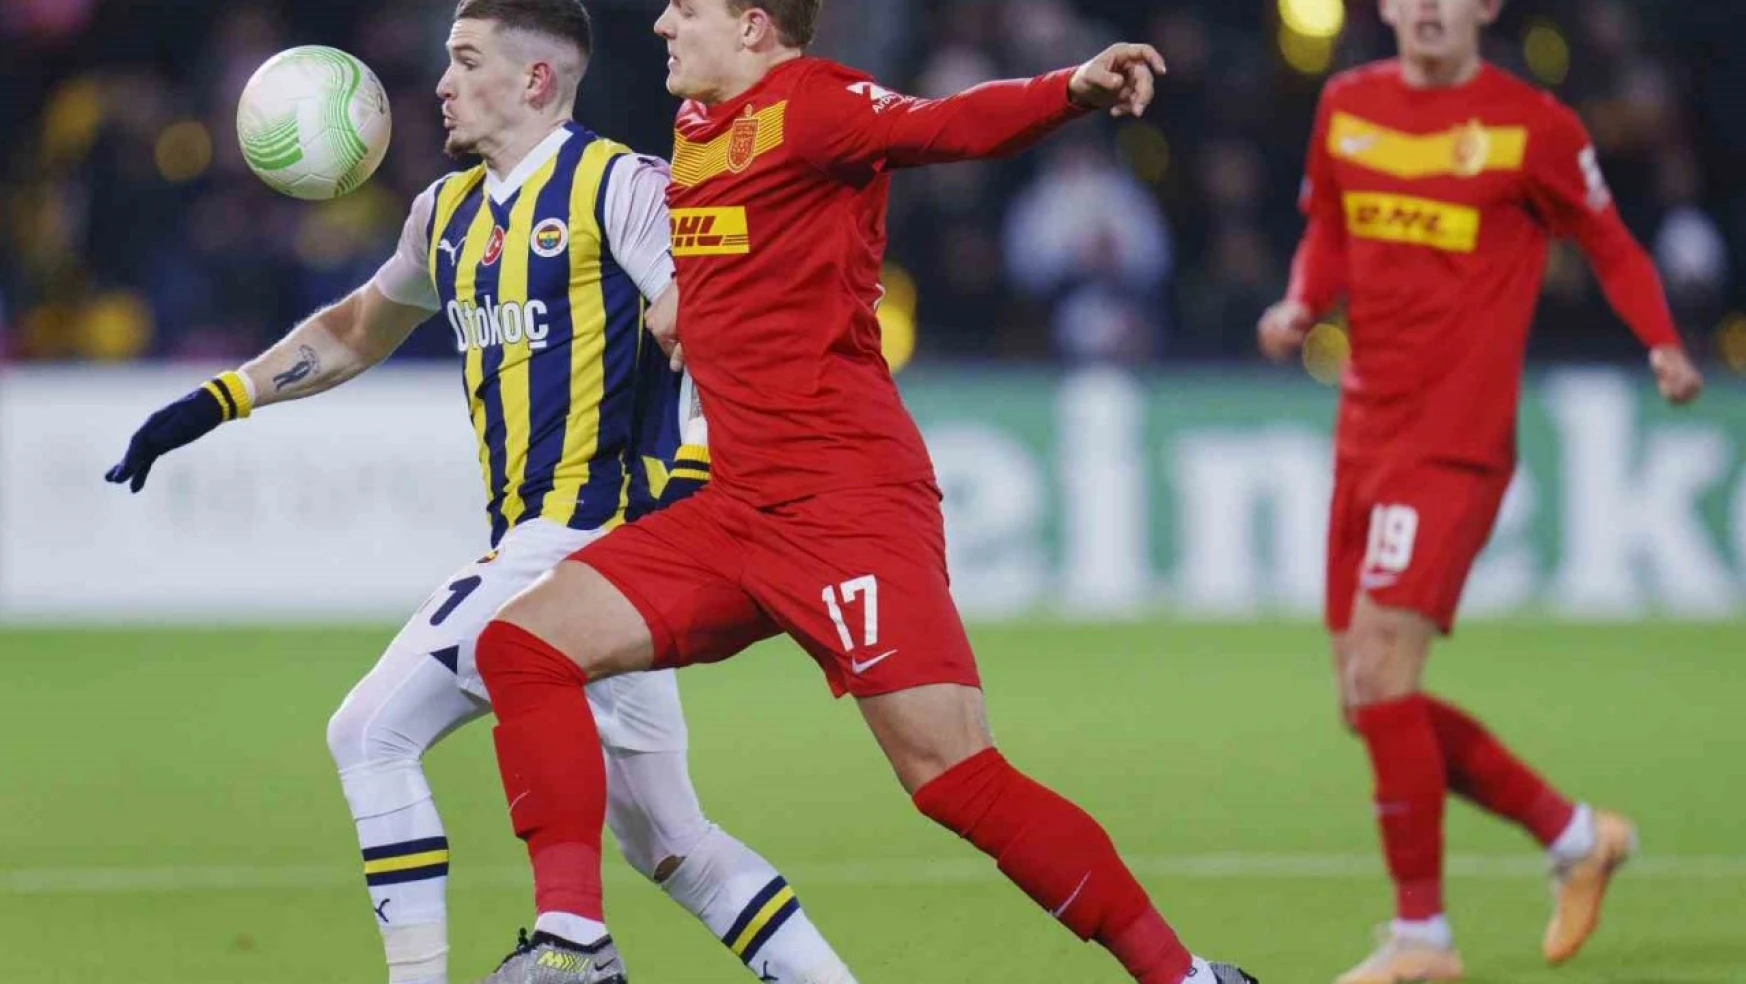 UEFA Avrupa Konferans Ligi: Nordsjaelland: 6 - Fenerbahçe: 1 (Maç sonucu)